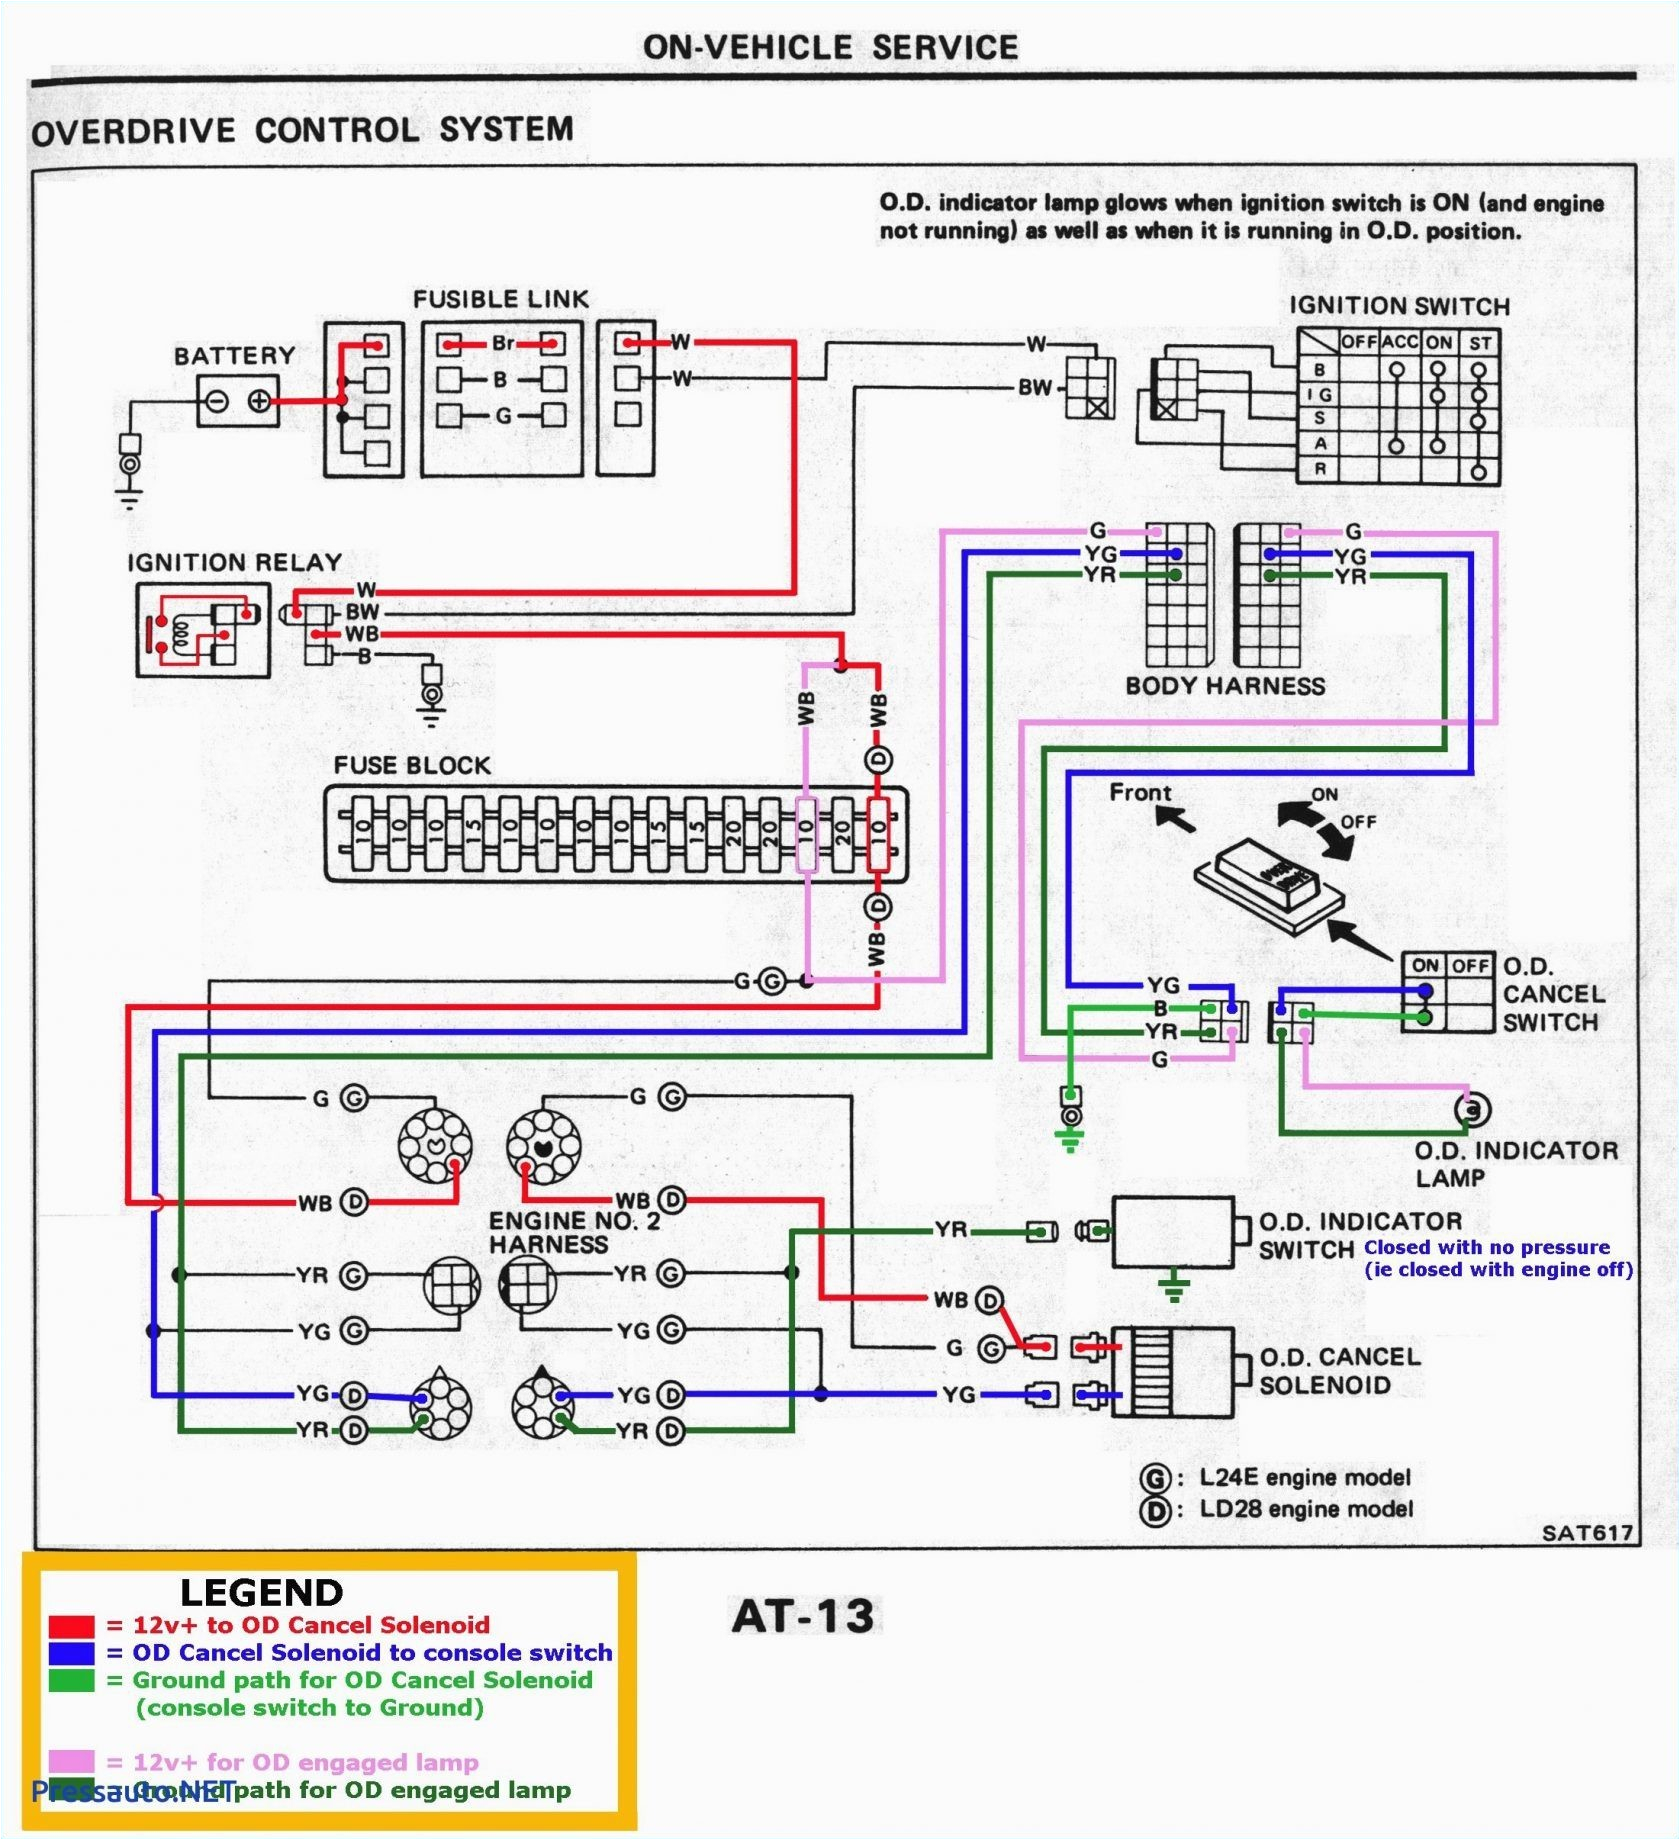 wiring model kenwood diagram kdcdishwasher wiring diagram kenwood model kdc 122 color wiring diagram